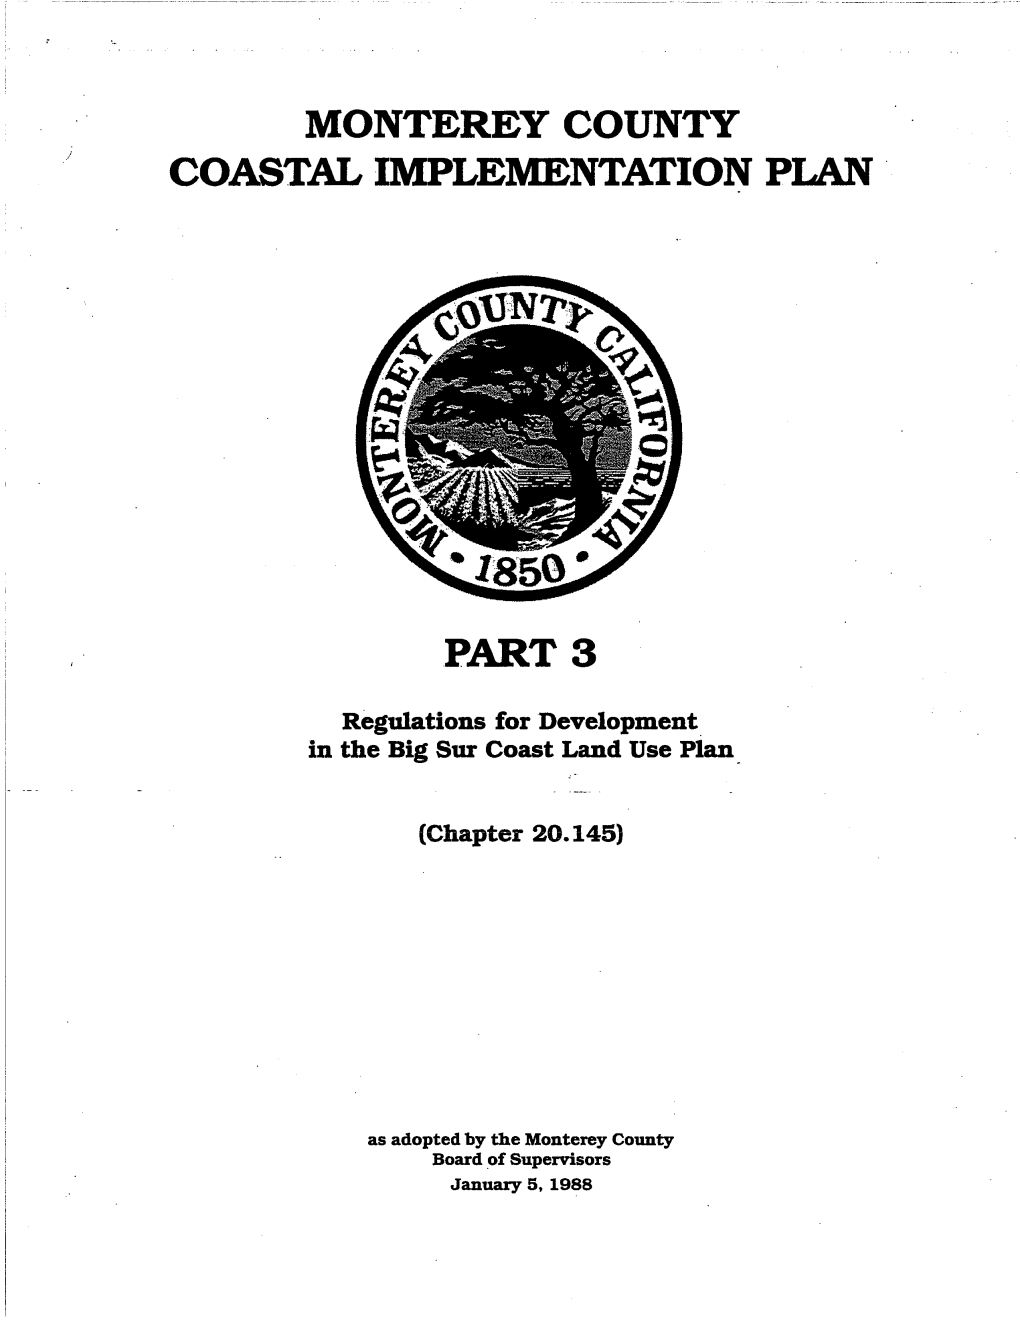 Big Sur Coastal Implementation Plan